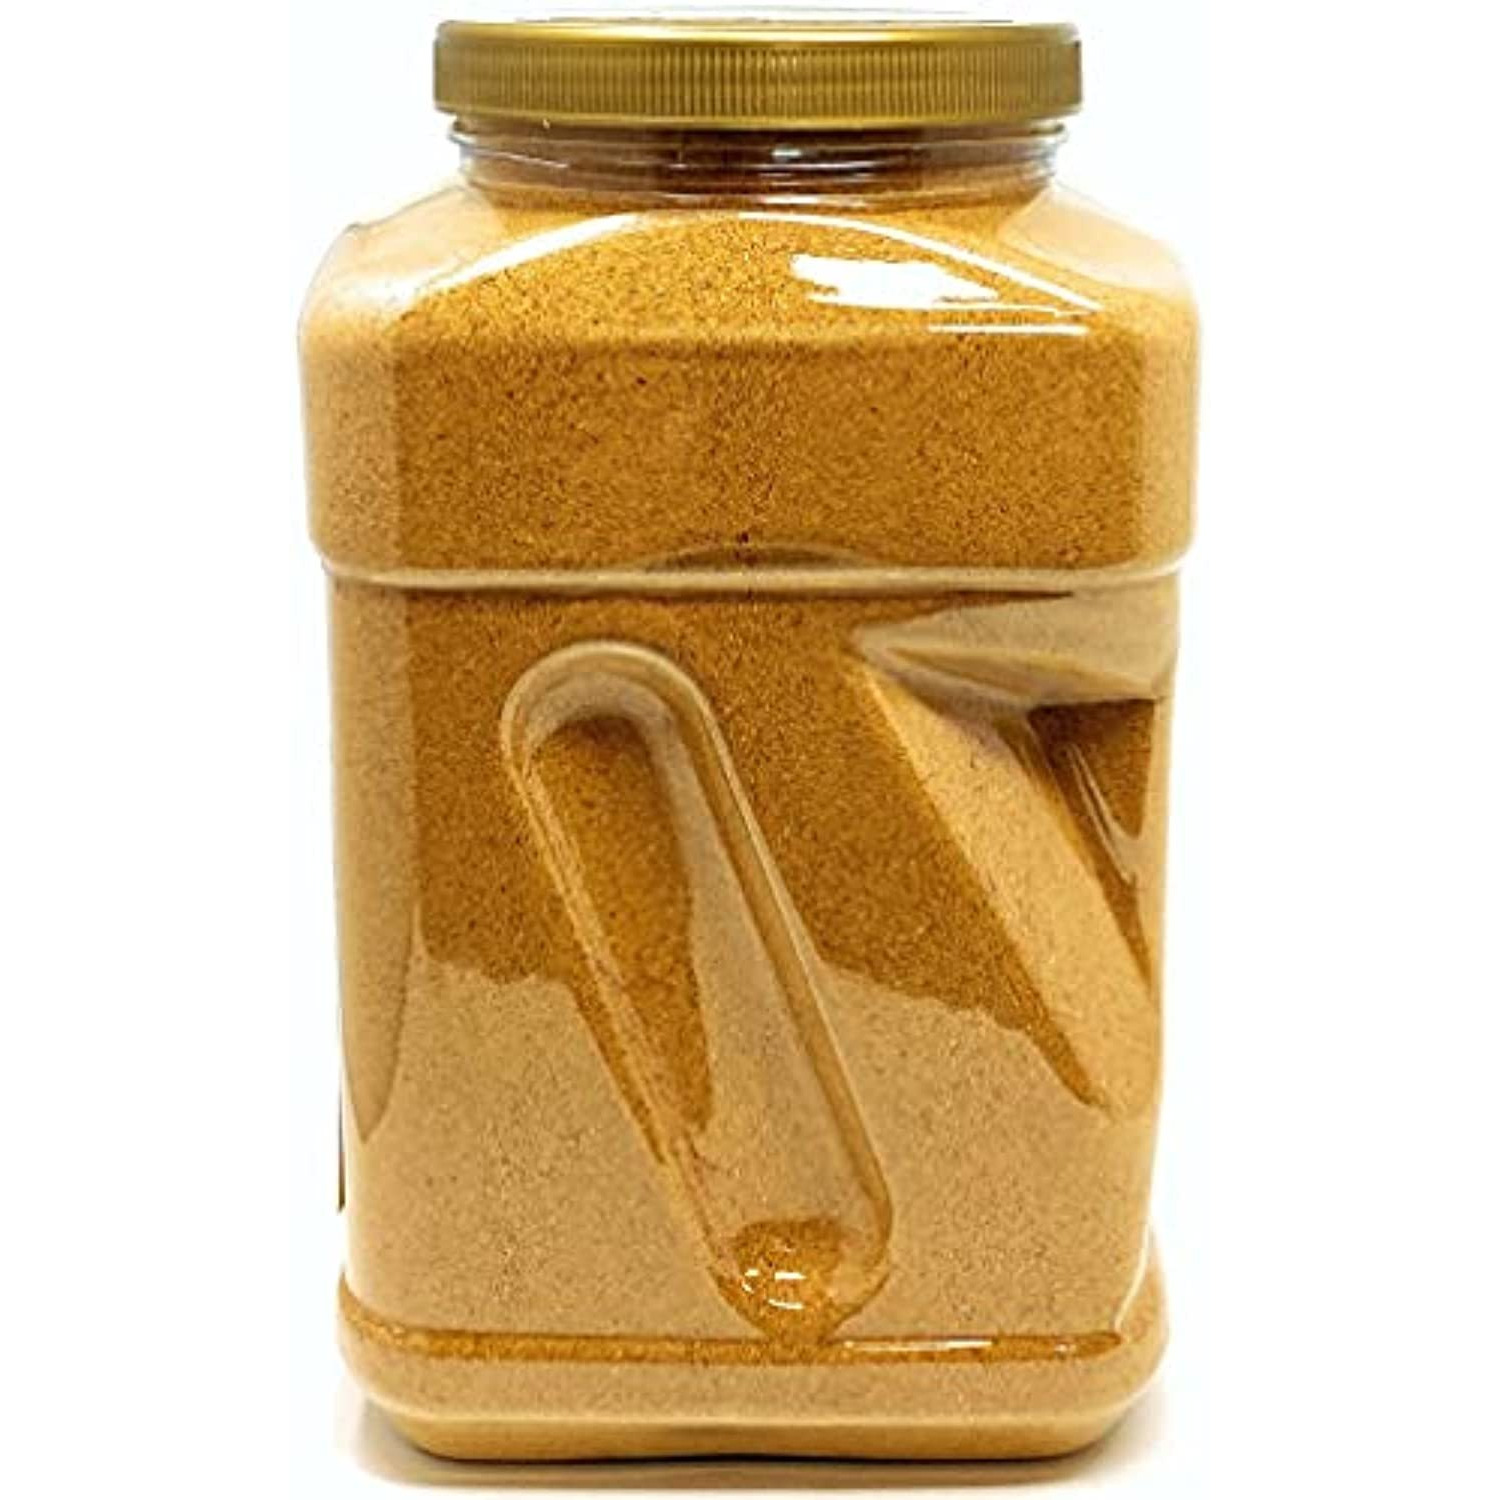 Rani Vindaloo Curry Masala Natural Indian Spice Blend 5lbs (80oz) 2.27kg PET Jar ~ Salt Free | Vegan | Gluten Friendly| NON-GMO | No colors | Indian Origin